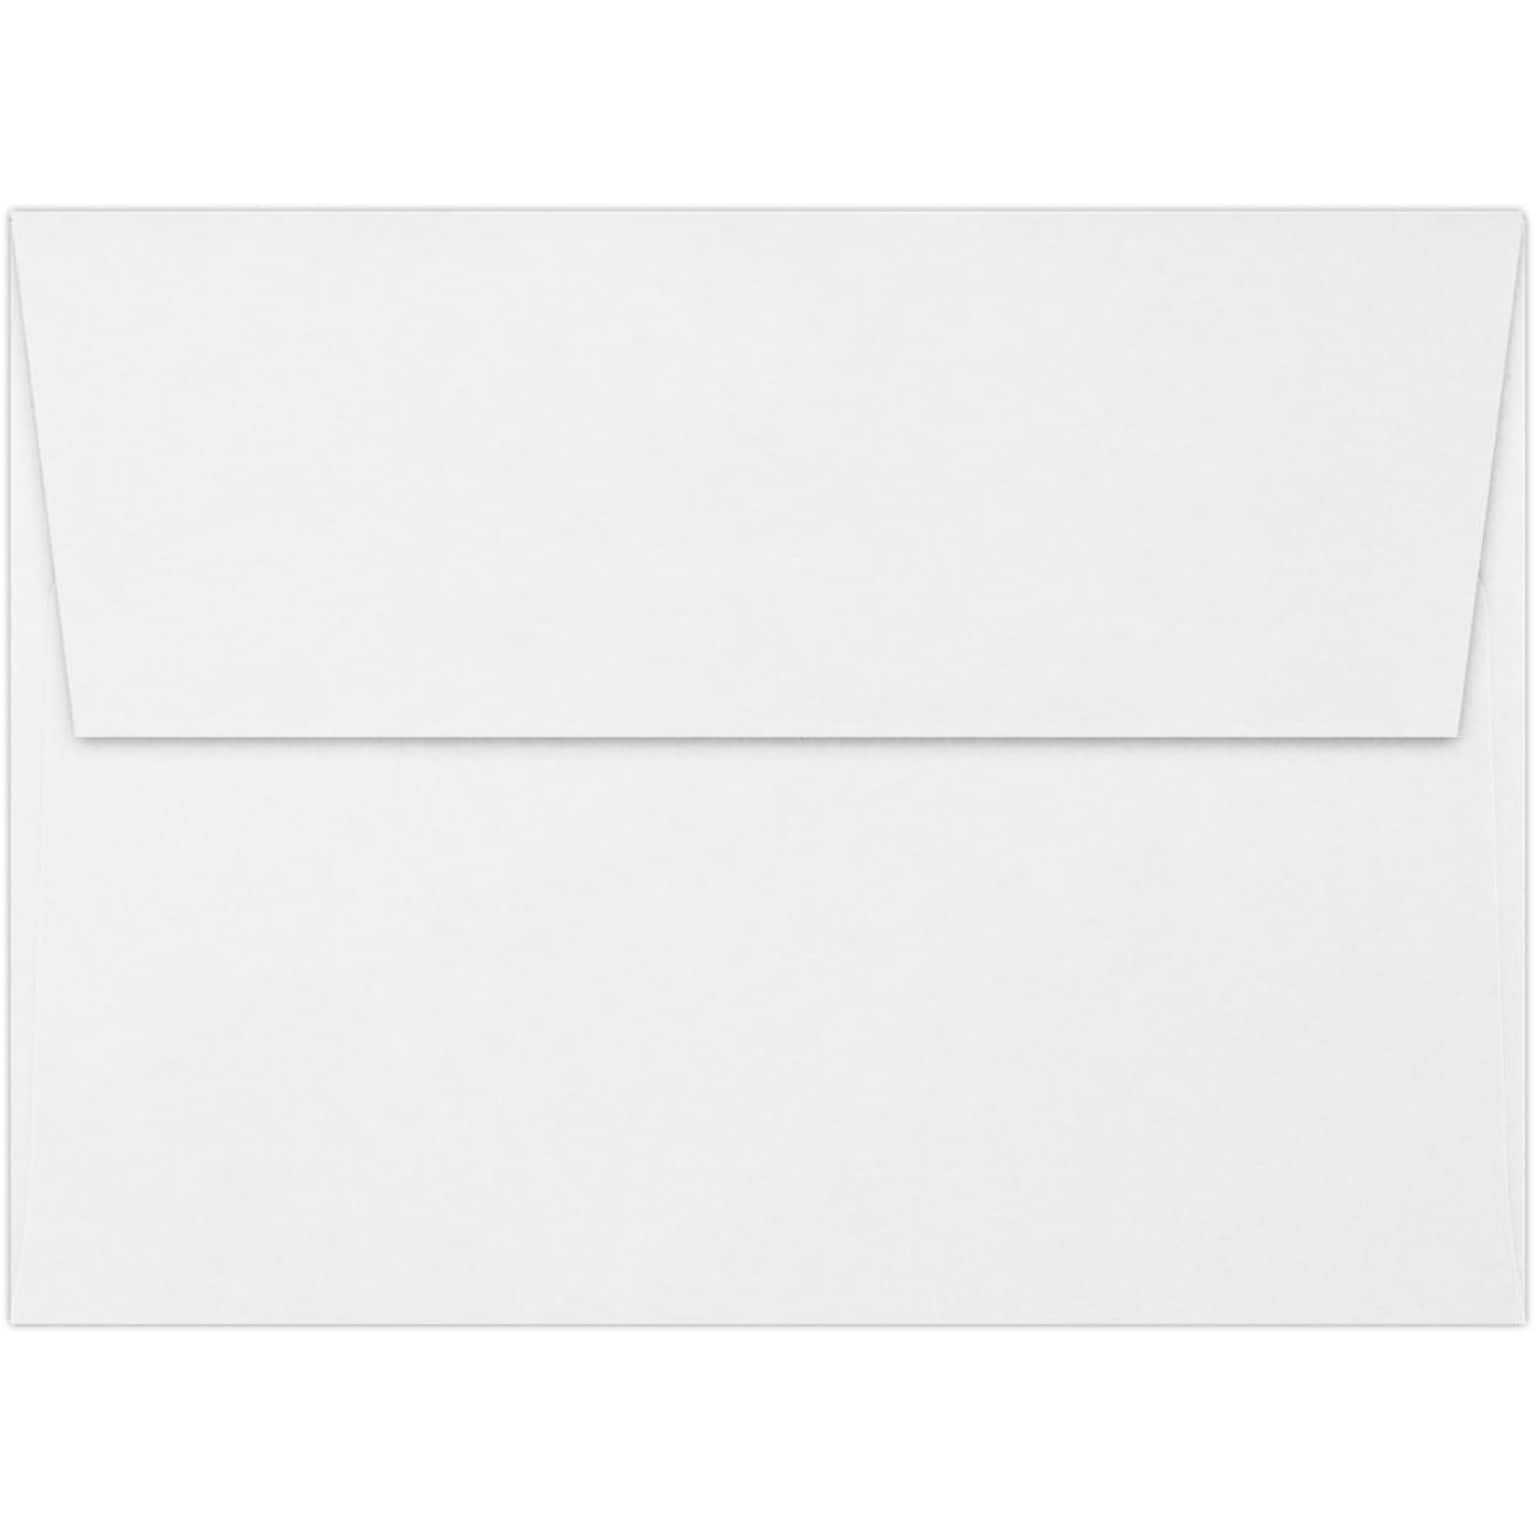 LUX A7 Invitation Envelopes (5 1/4 x 7 1/4) 500/Pack, 70lb. Classic Linen® Solar White (4880-70SWLI-500)